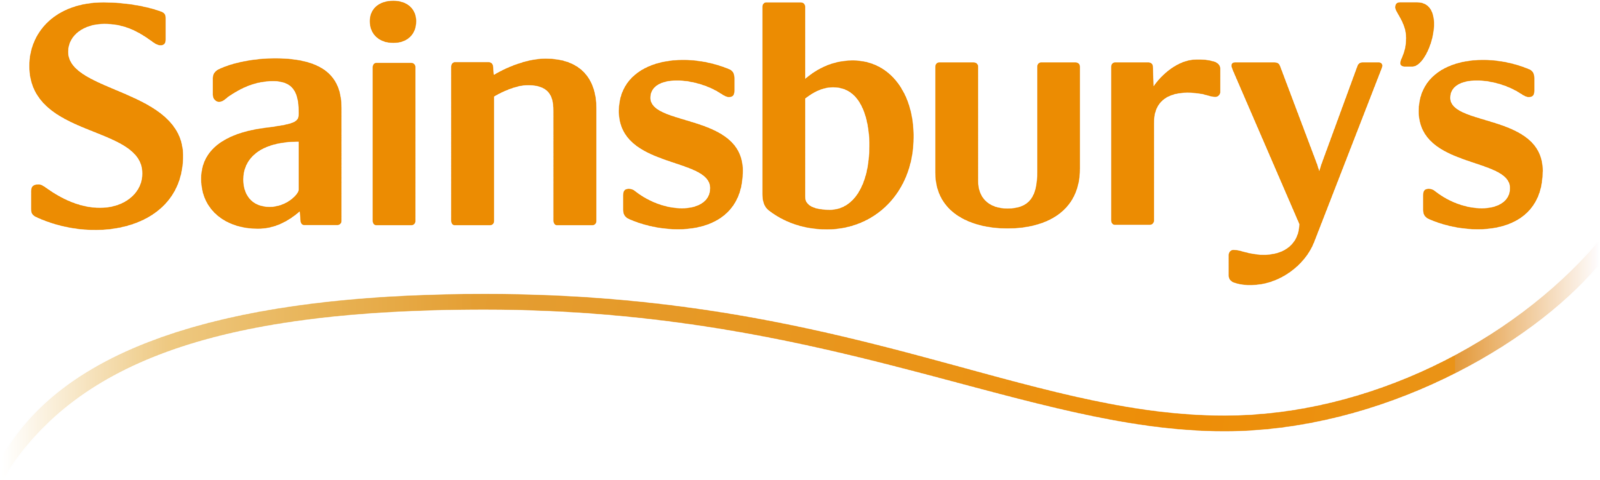 Sainsburys logo - www.simplers.co.uk